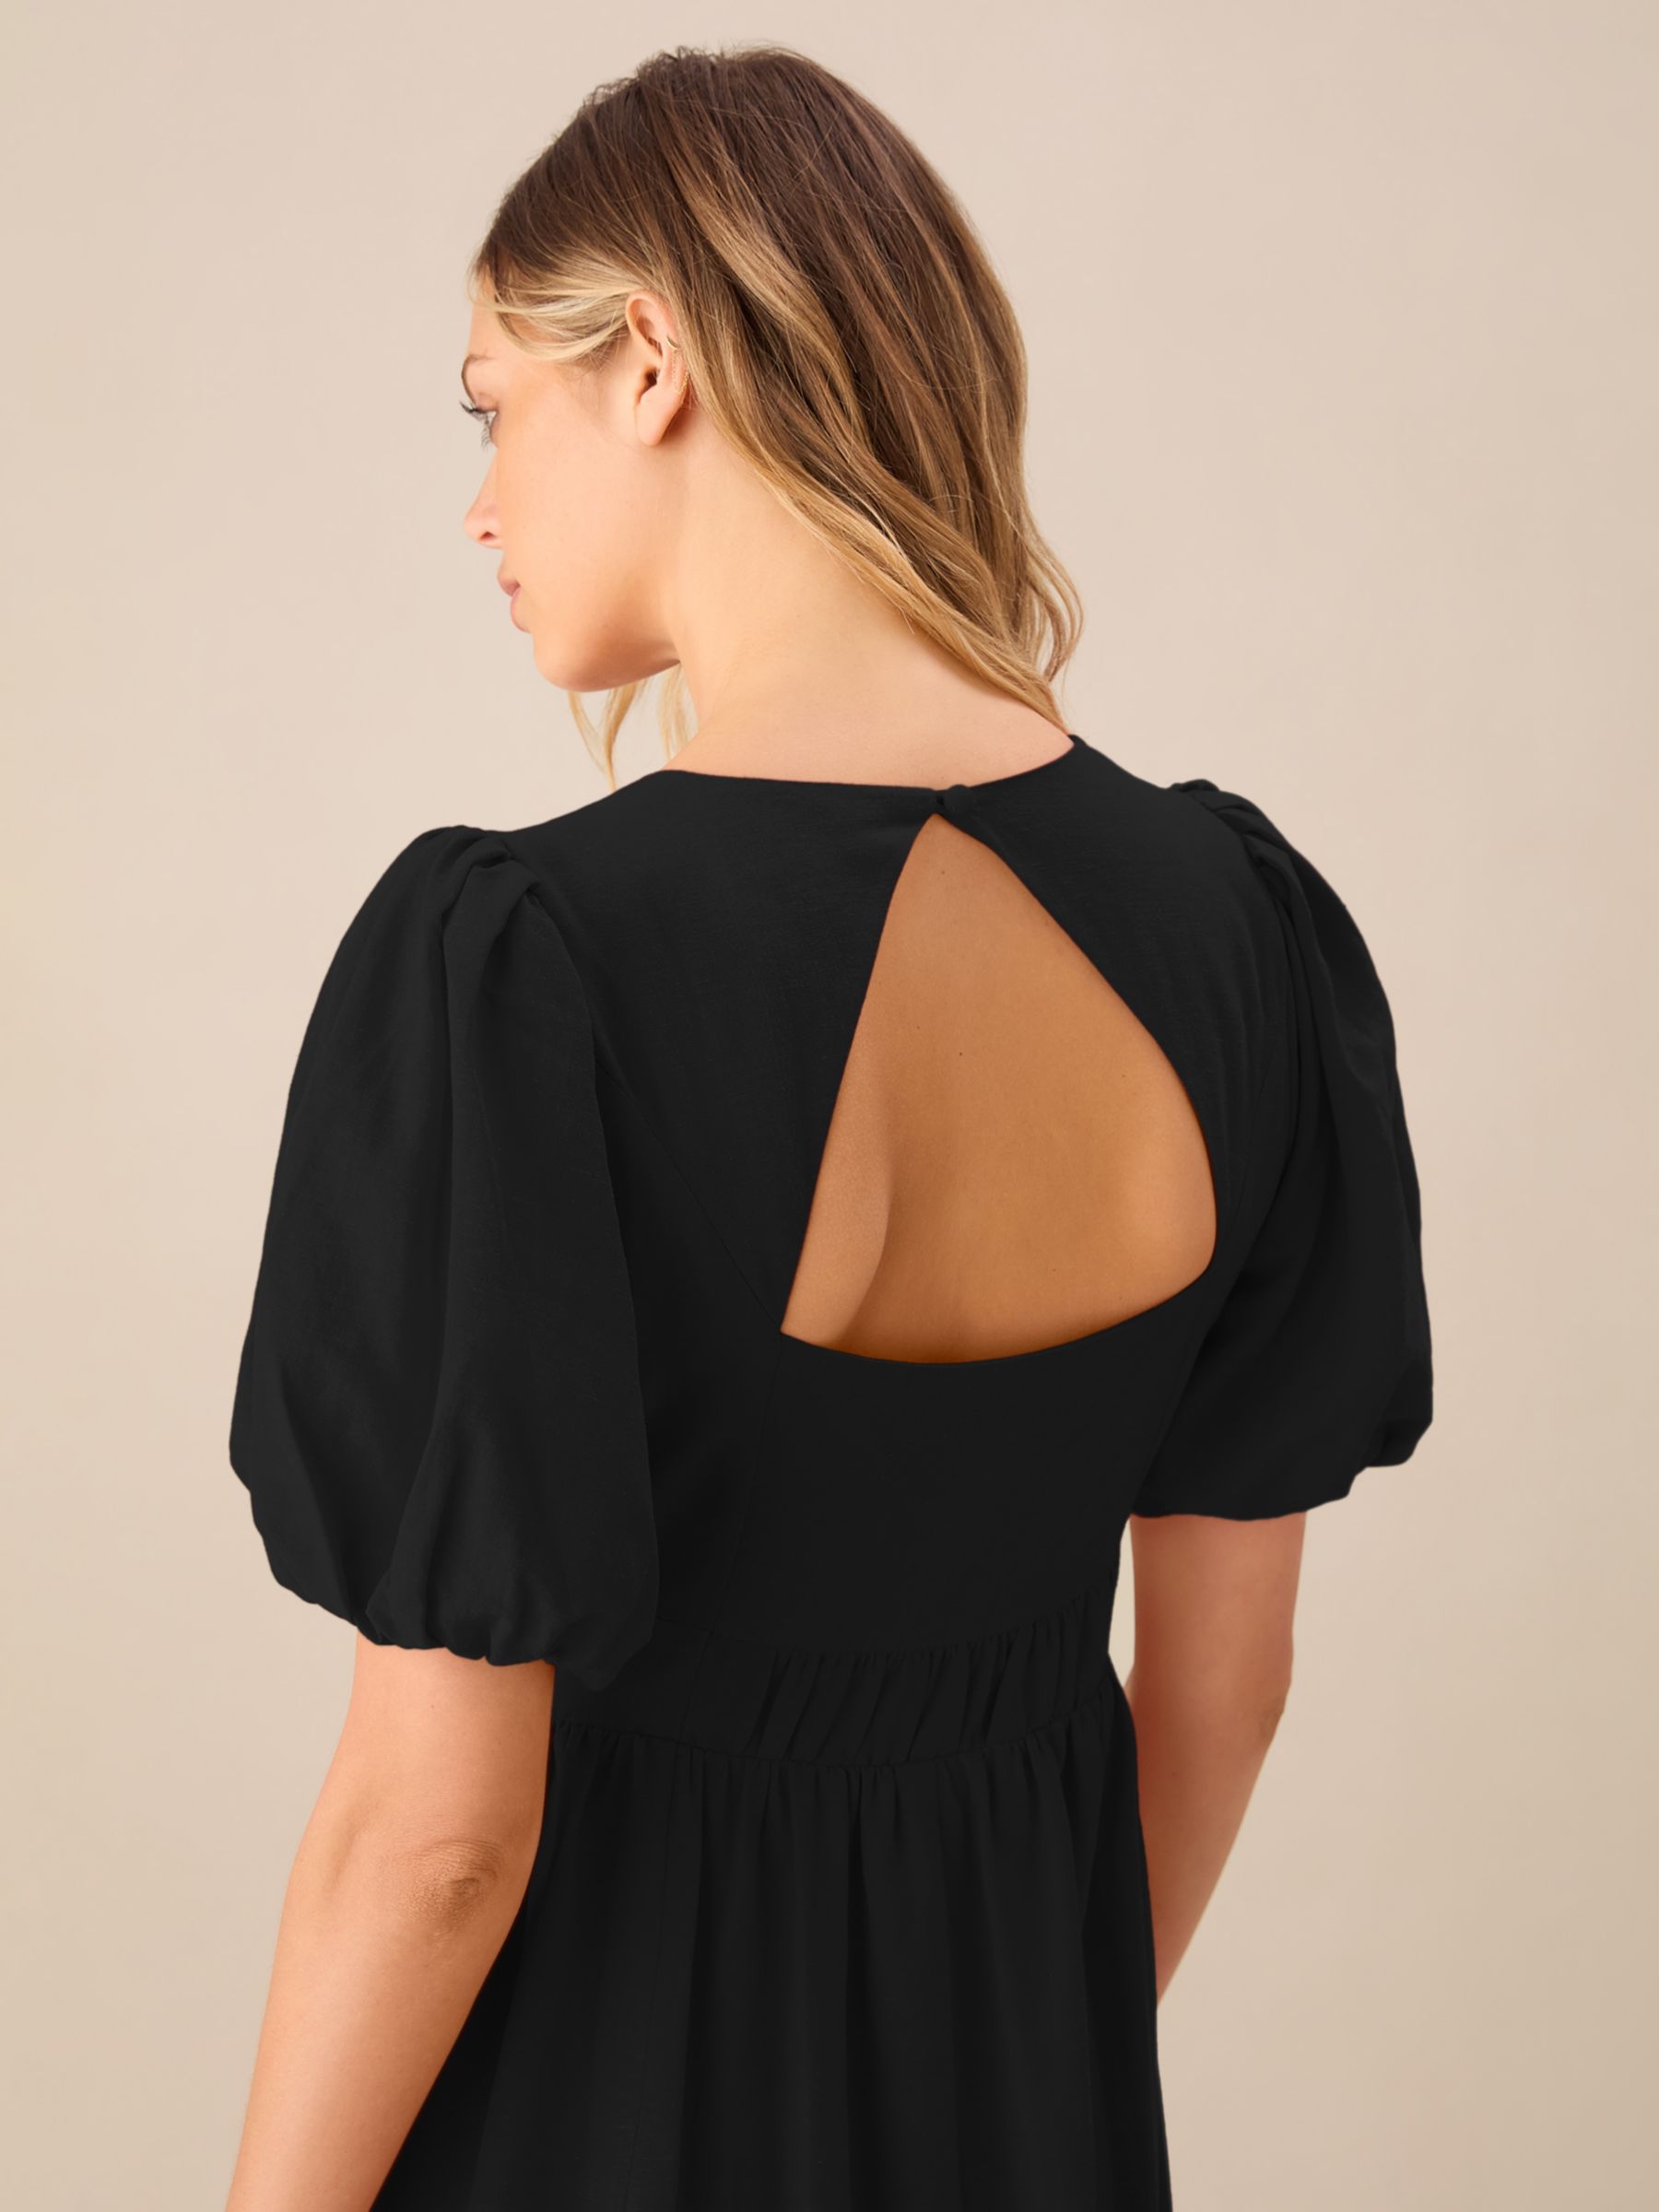 Ro&Zo Puff Sleeve Linen Blend Midi Dress, Black, 6